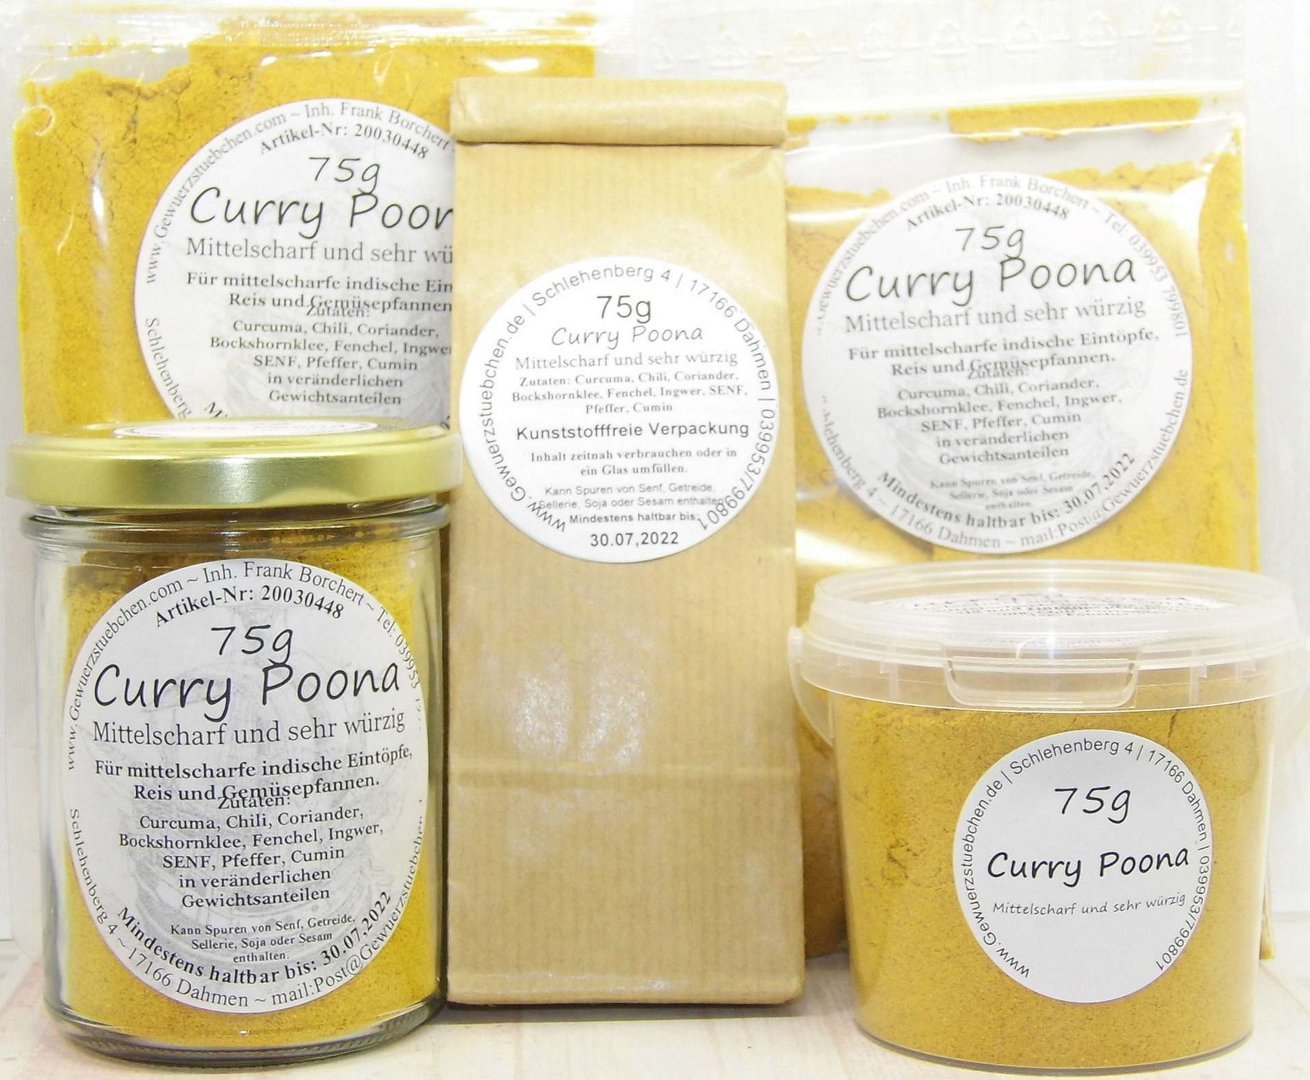 Curry Poona (75g) mittelscharf